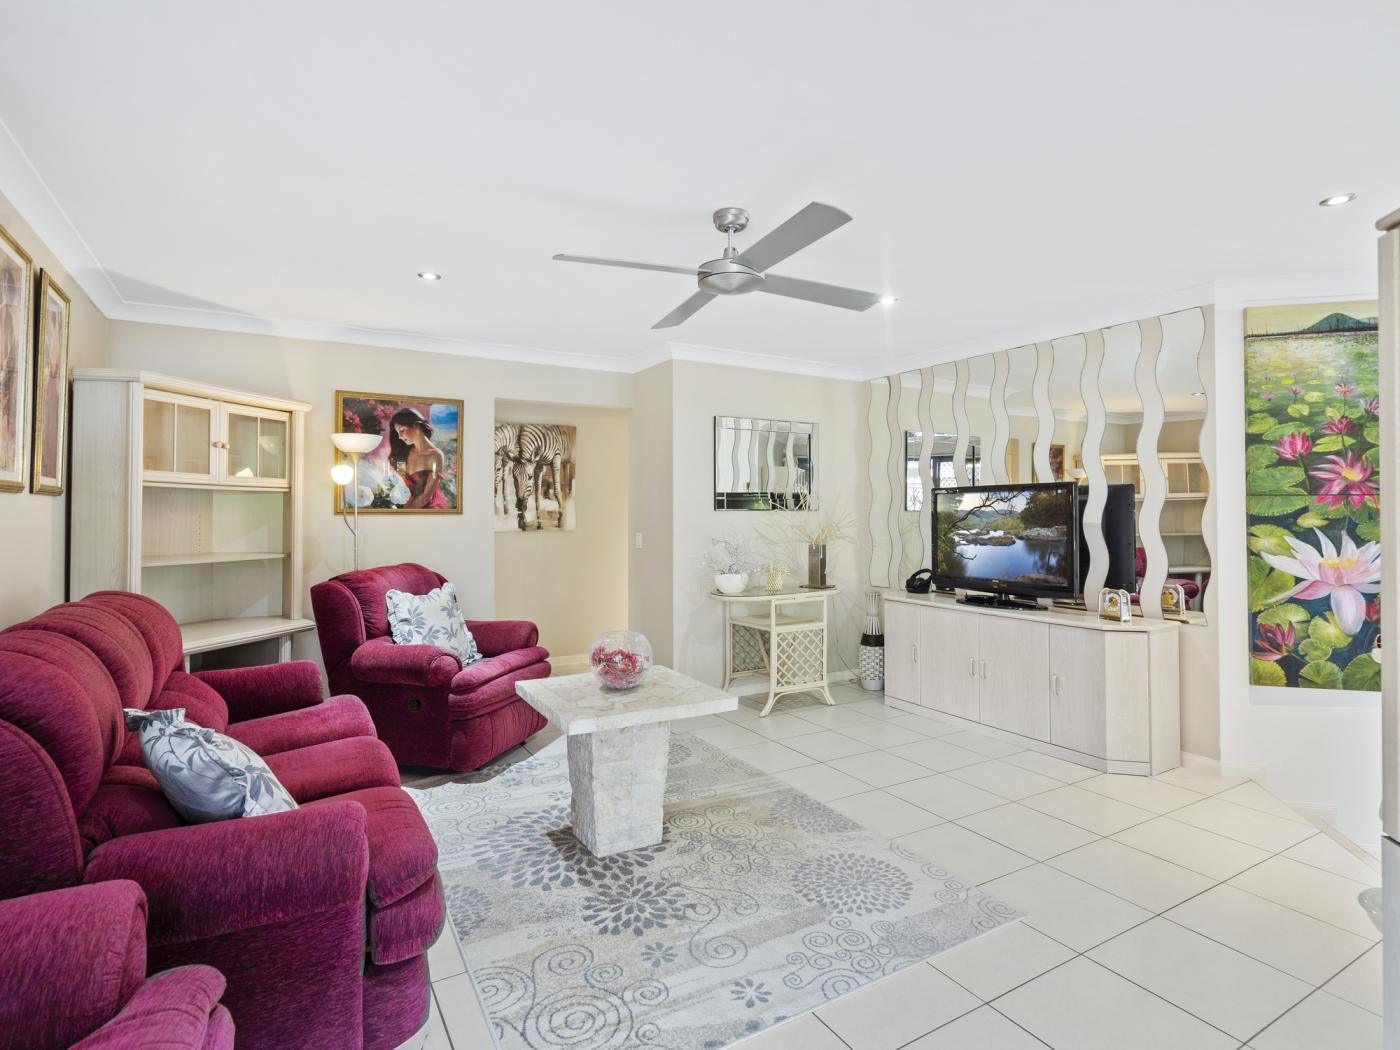 M-Motion Real Estate Agency, 18 Tipuana Drive Elanora, QLD, 4221, Michael Mahon, Lauren Mahon, Best Real Estate Agent Gold Coast